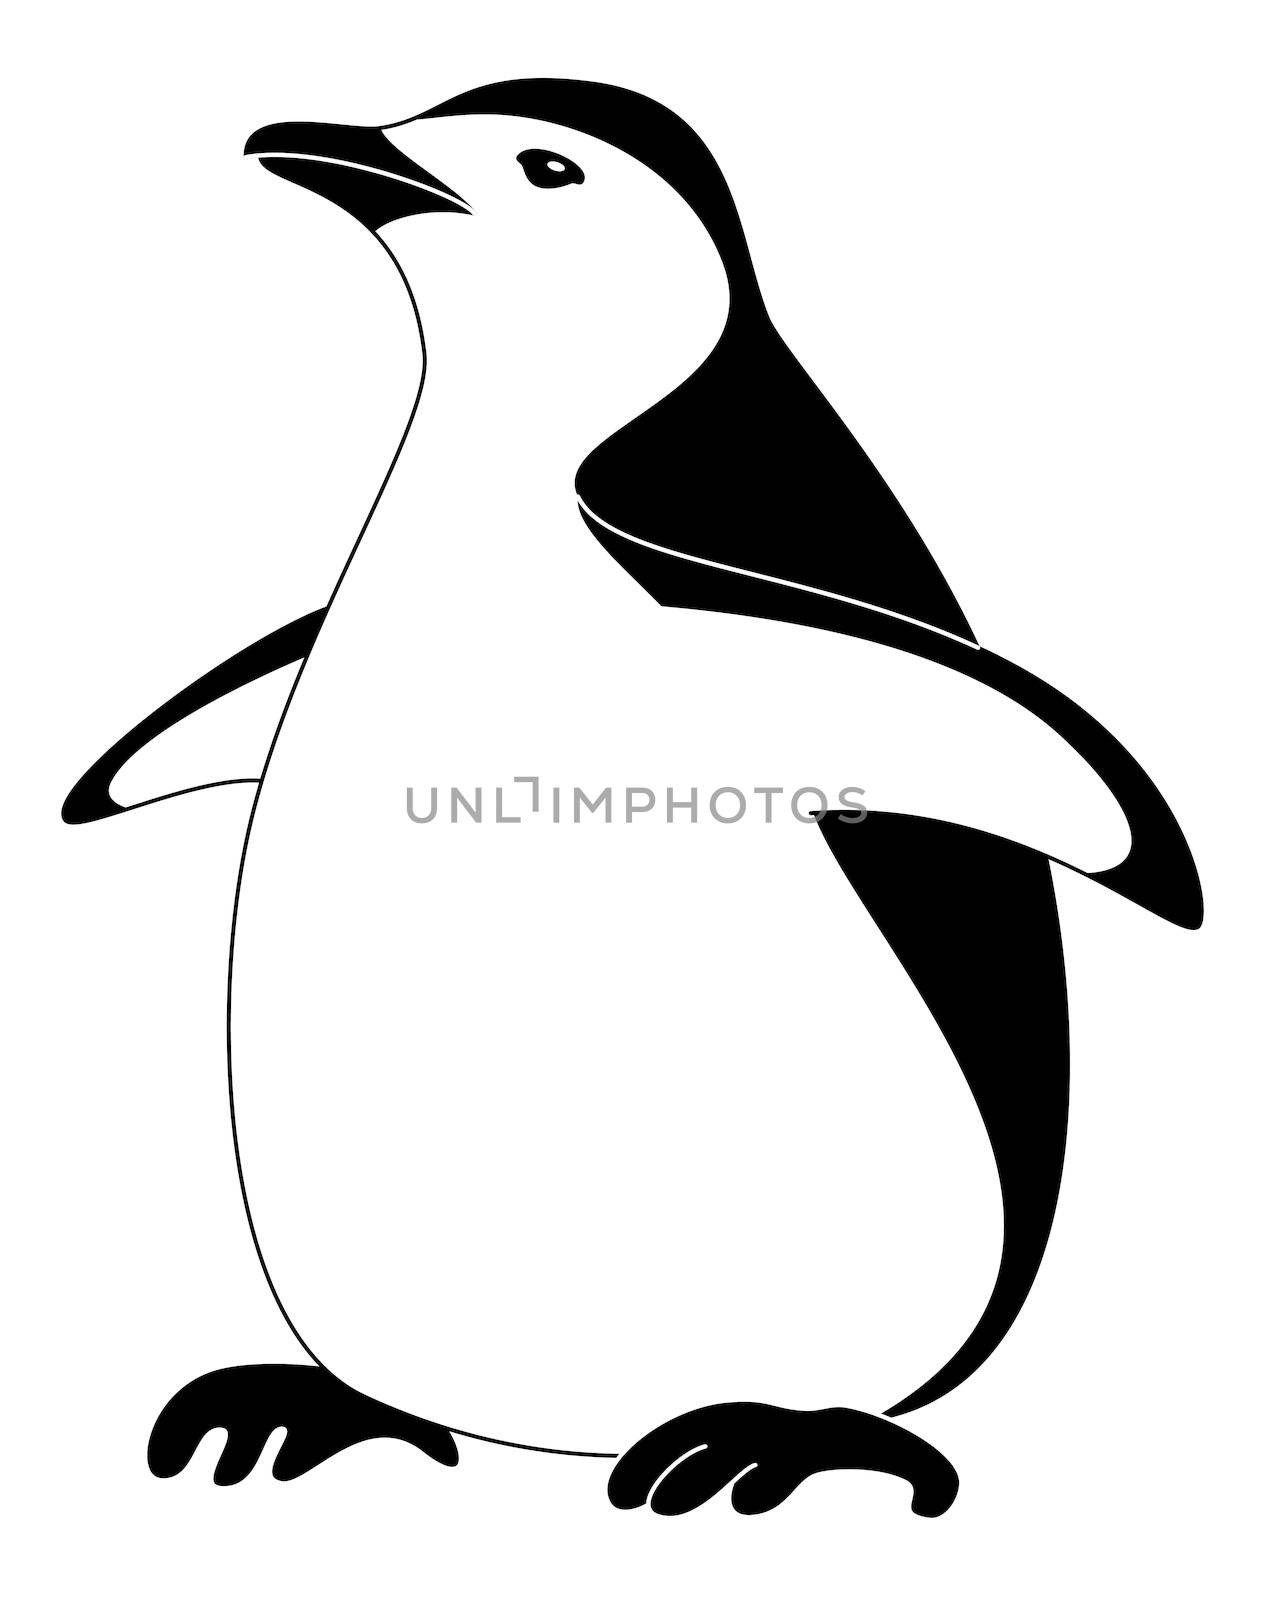 Antarctic bird emperor penguin, black silhouette on white background